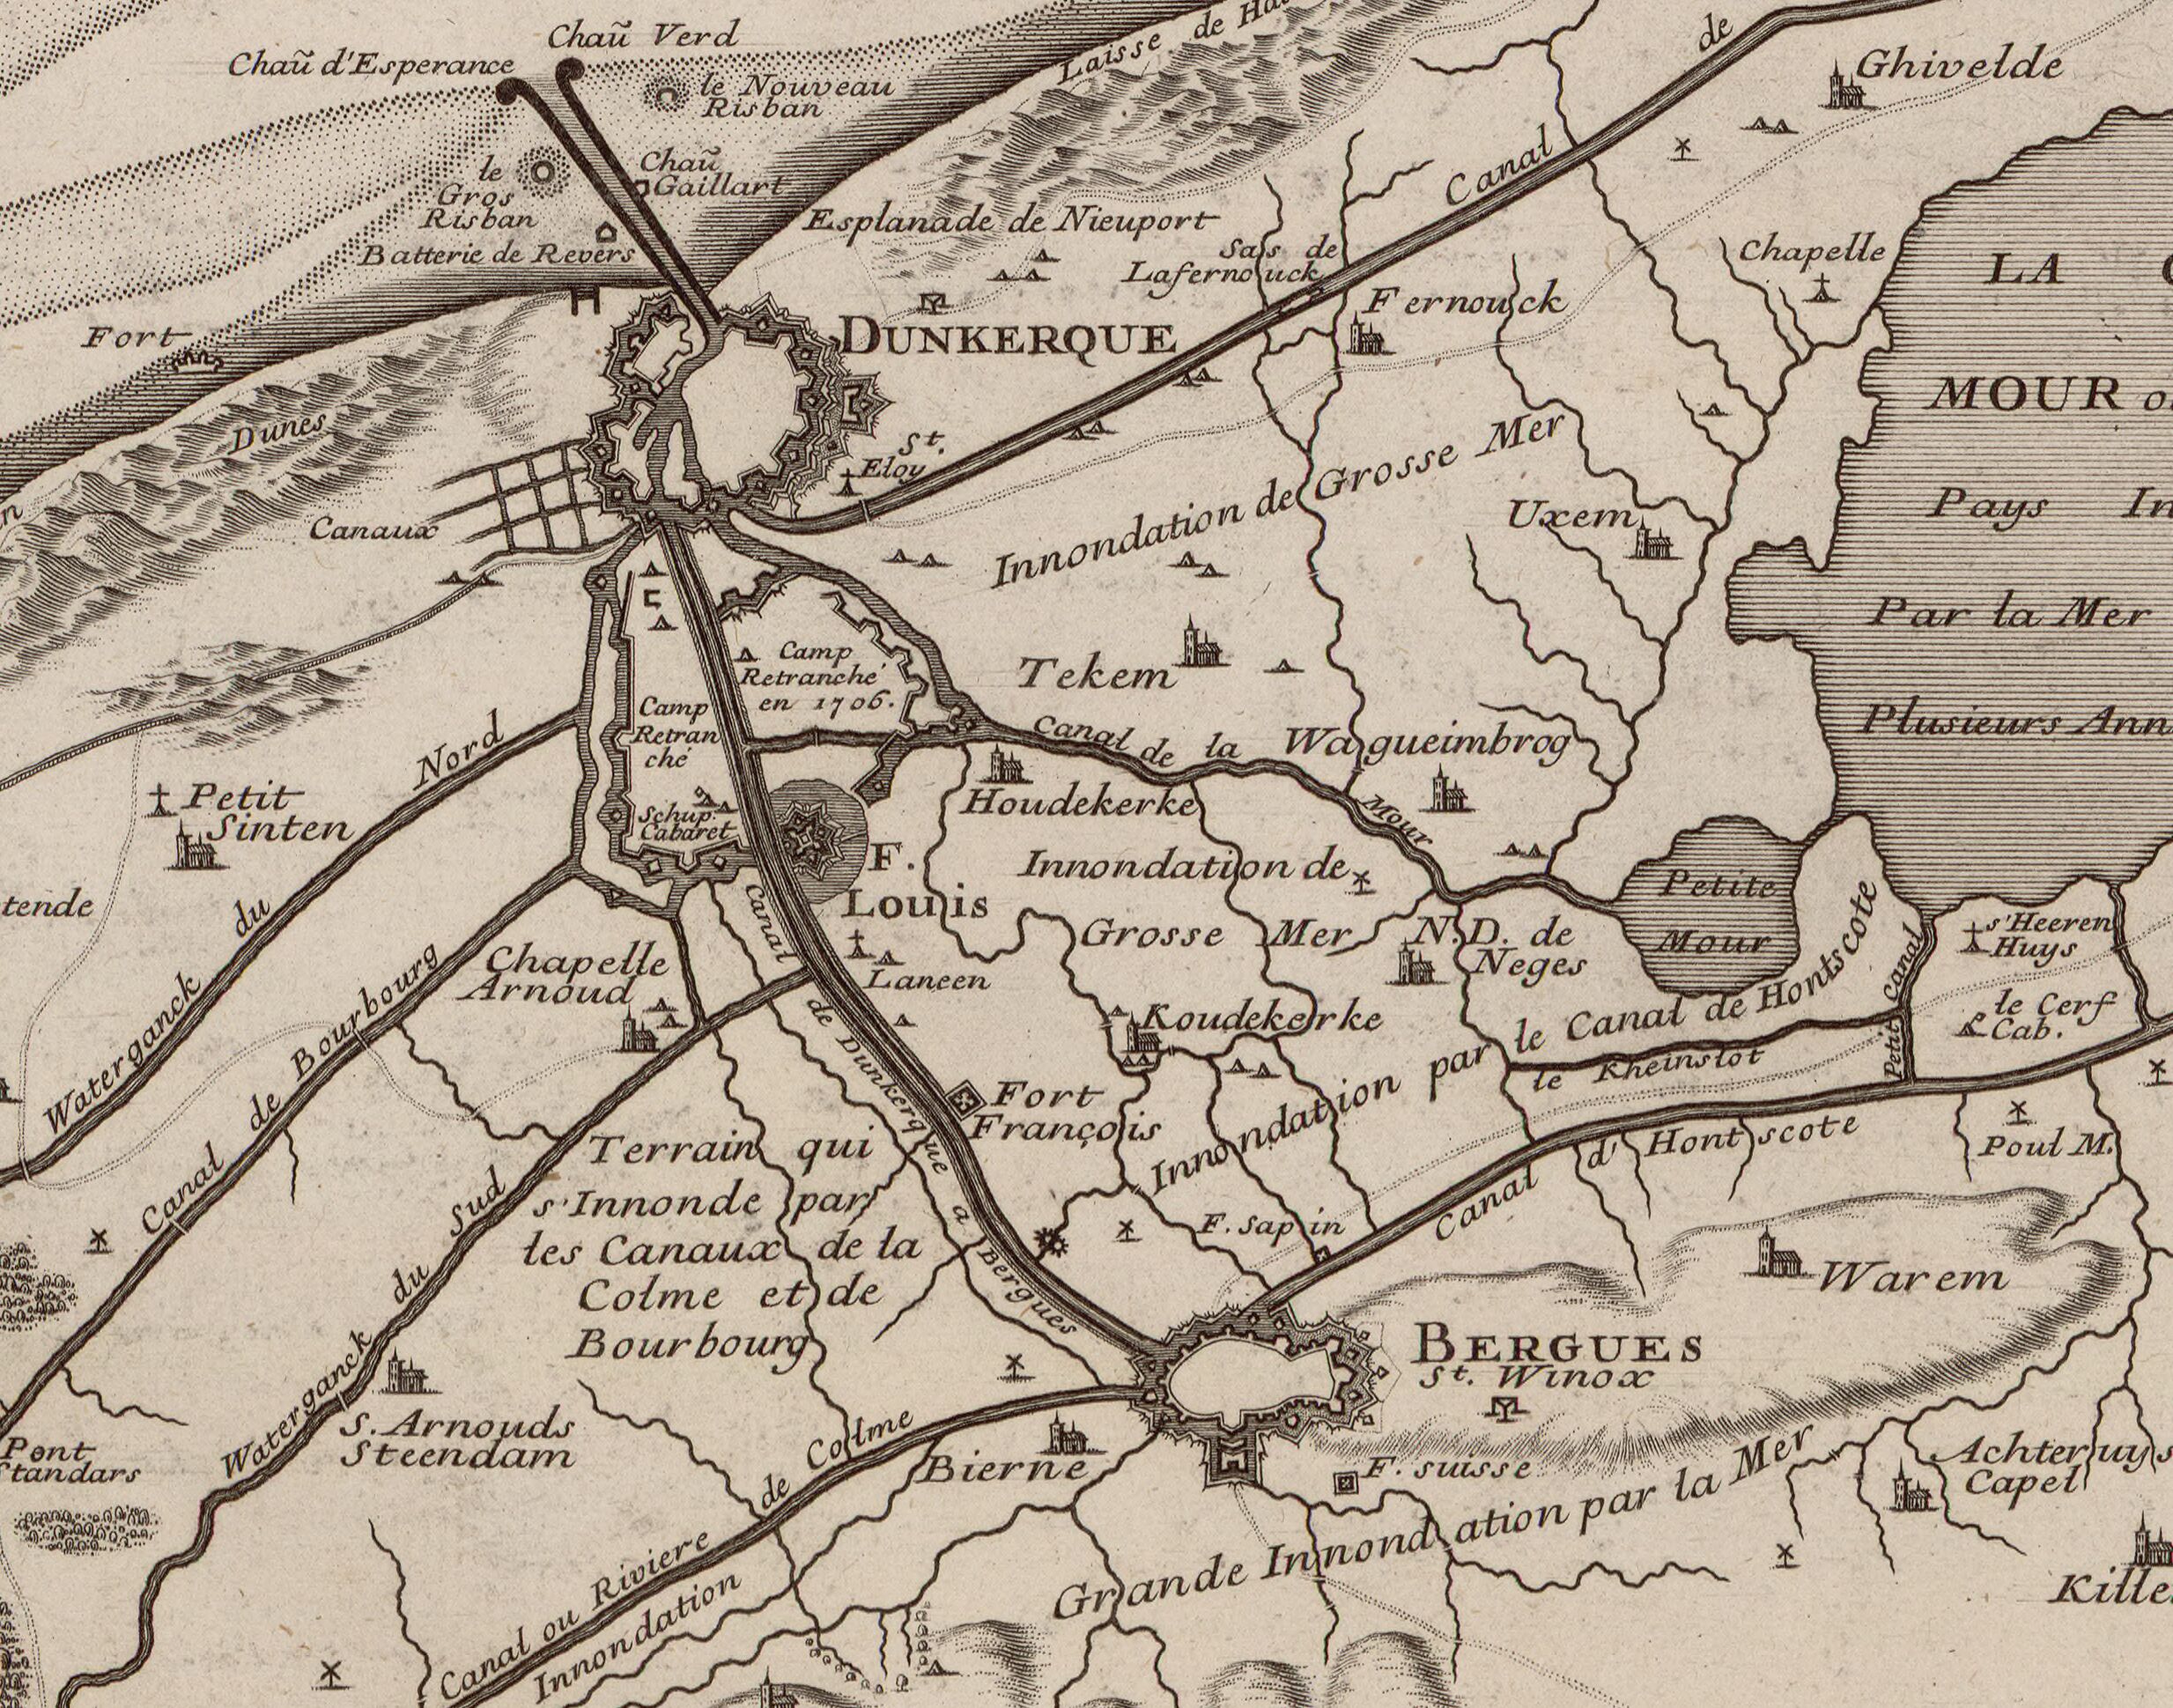 Carte des environs de Bergues et de Dunkerque en 1710